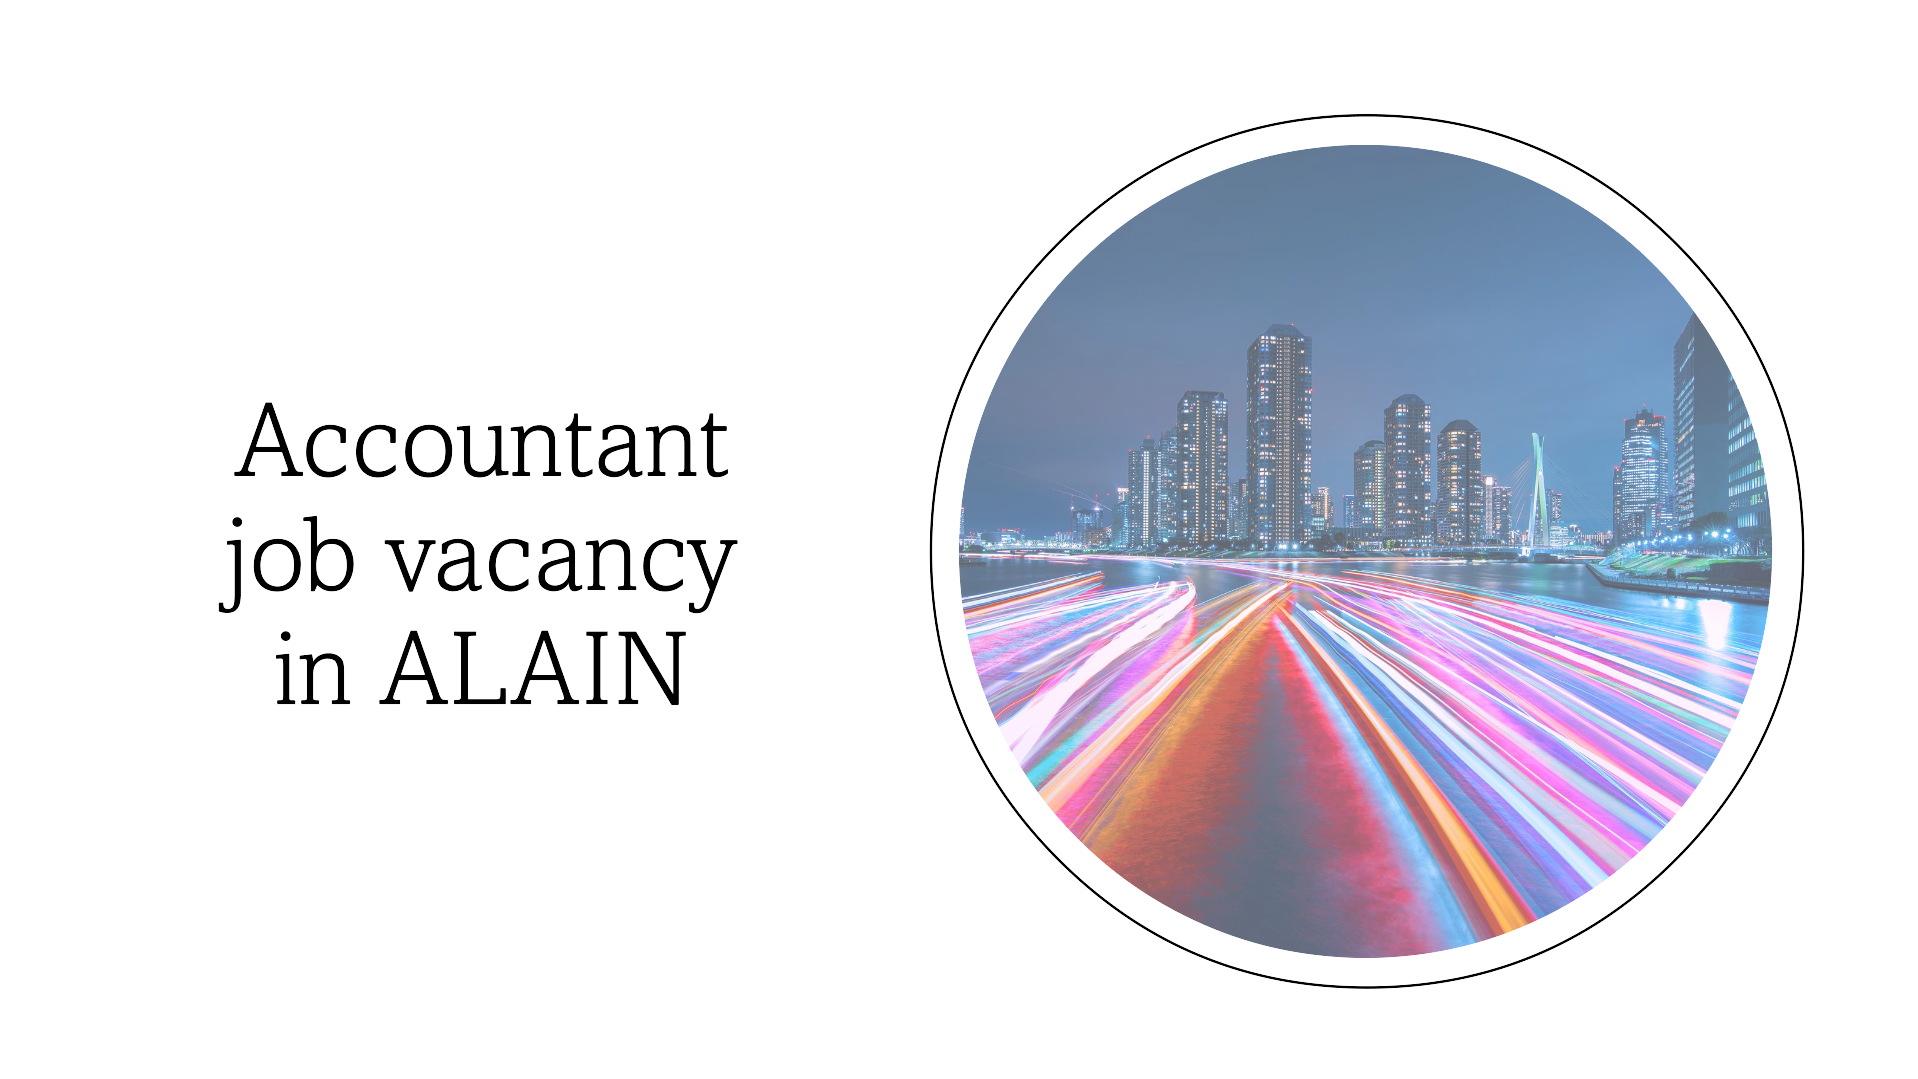 Accountant job vacancy in ALAIN